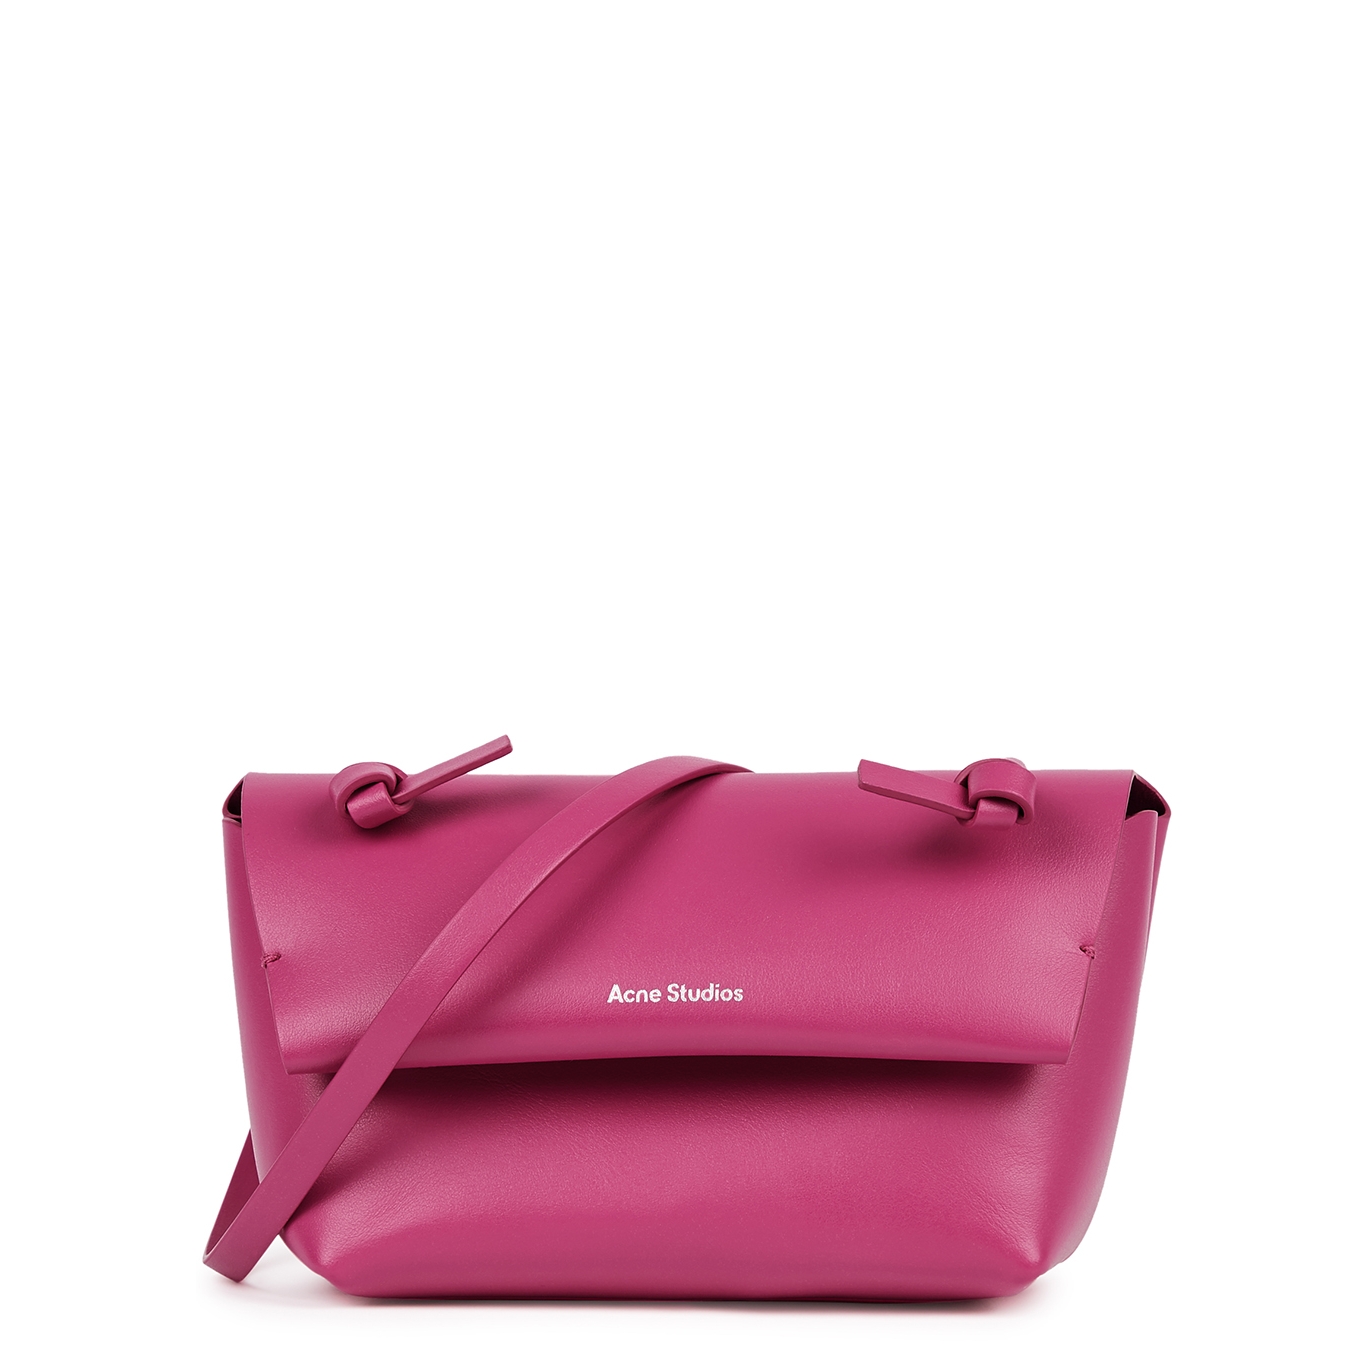 Acne Studios Alexandria Pink Leather Shoulder Bag